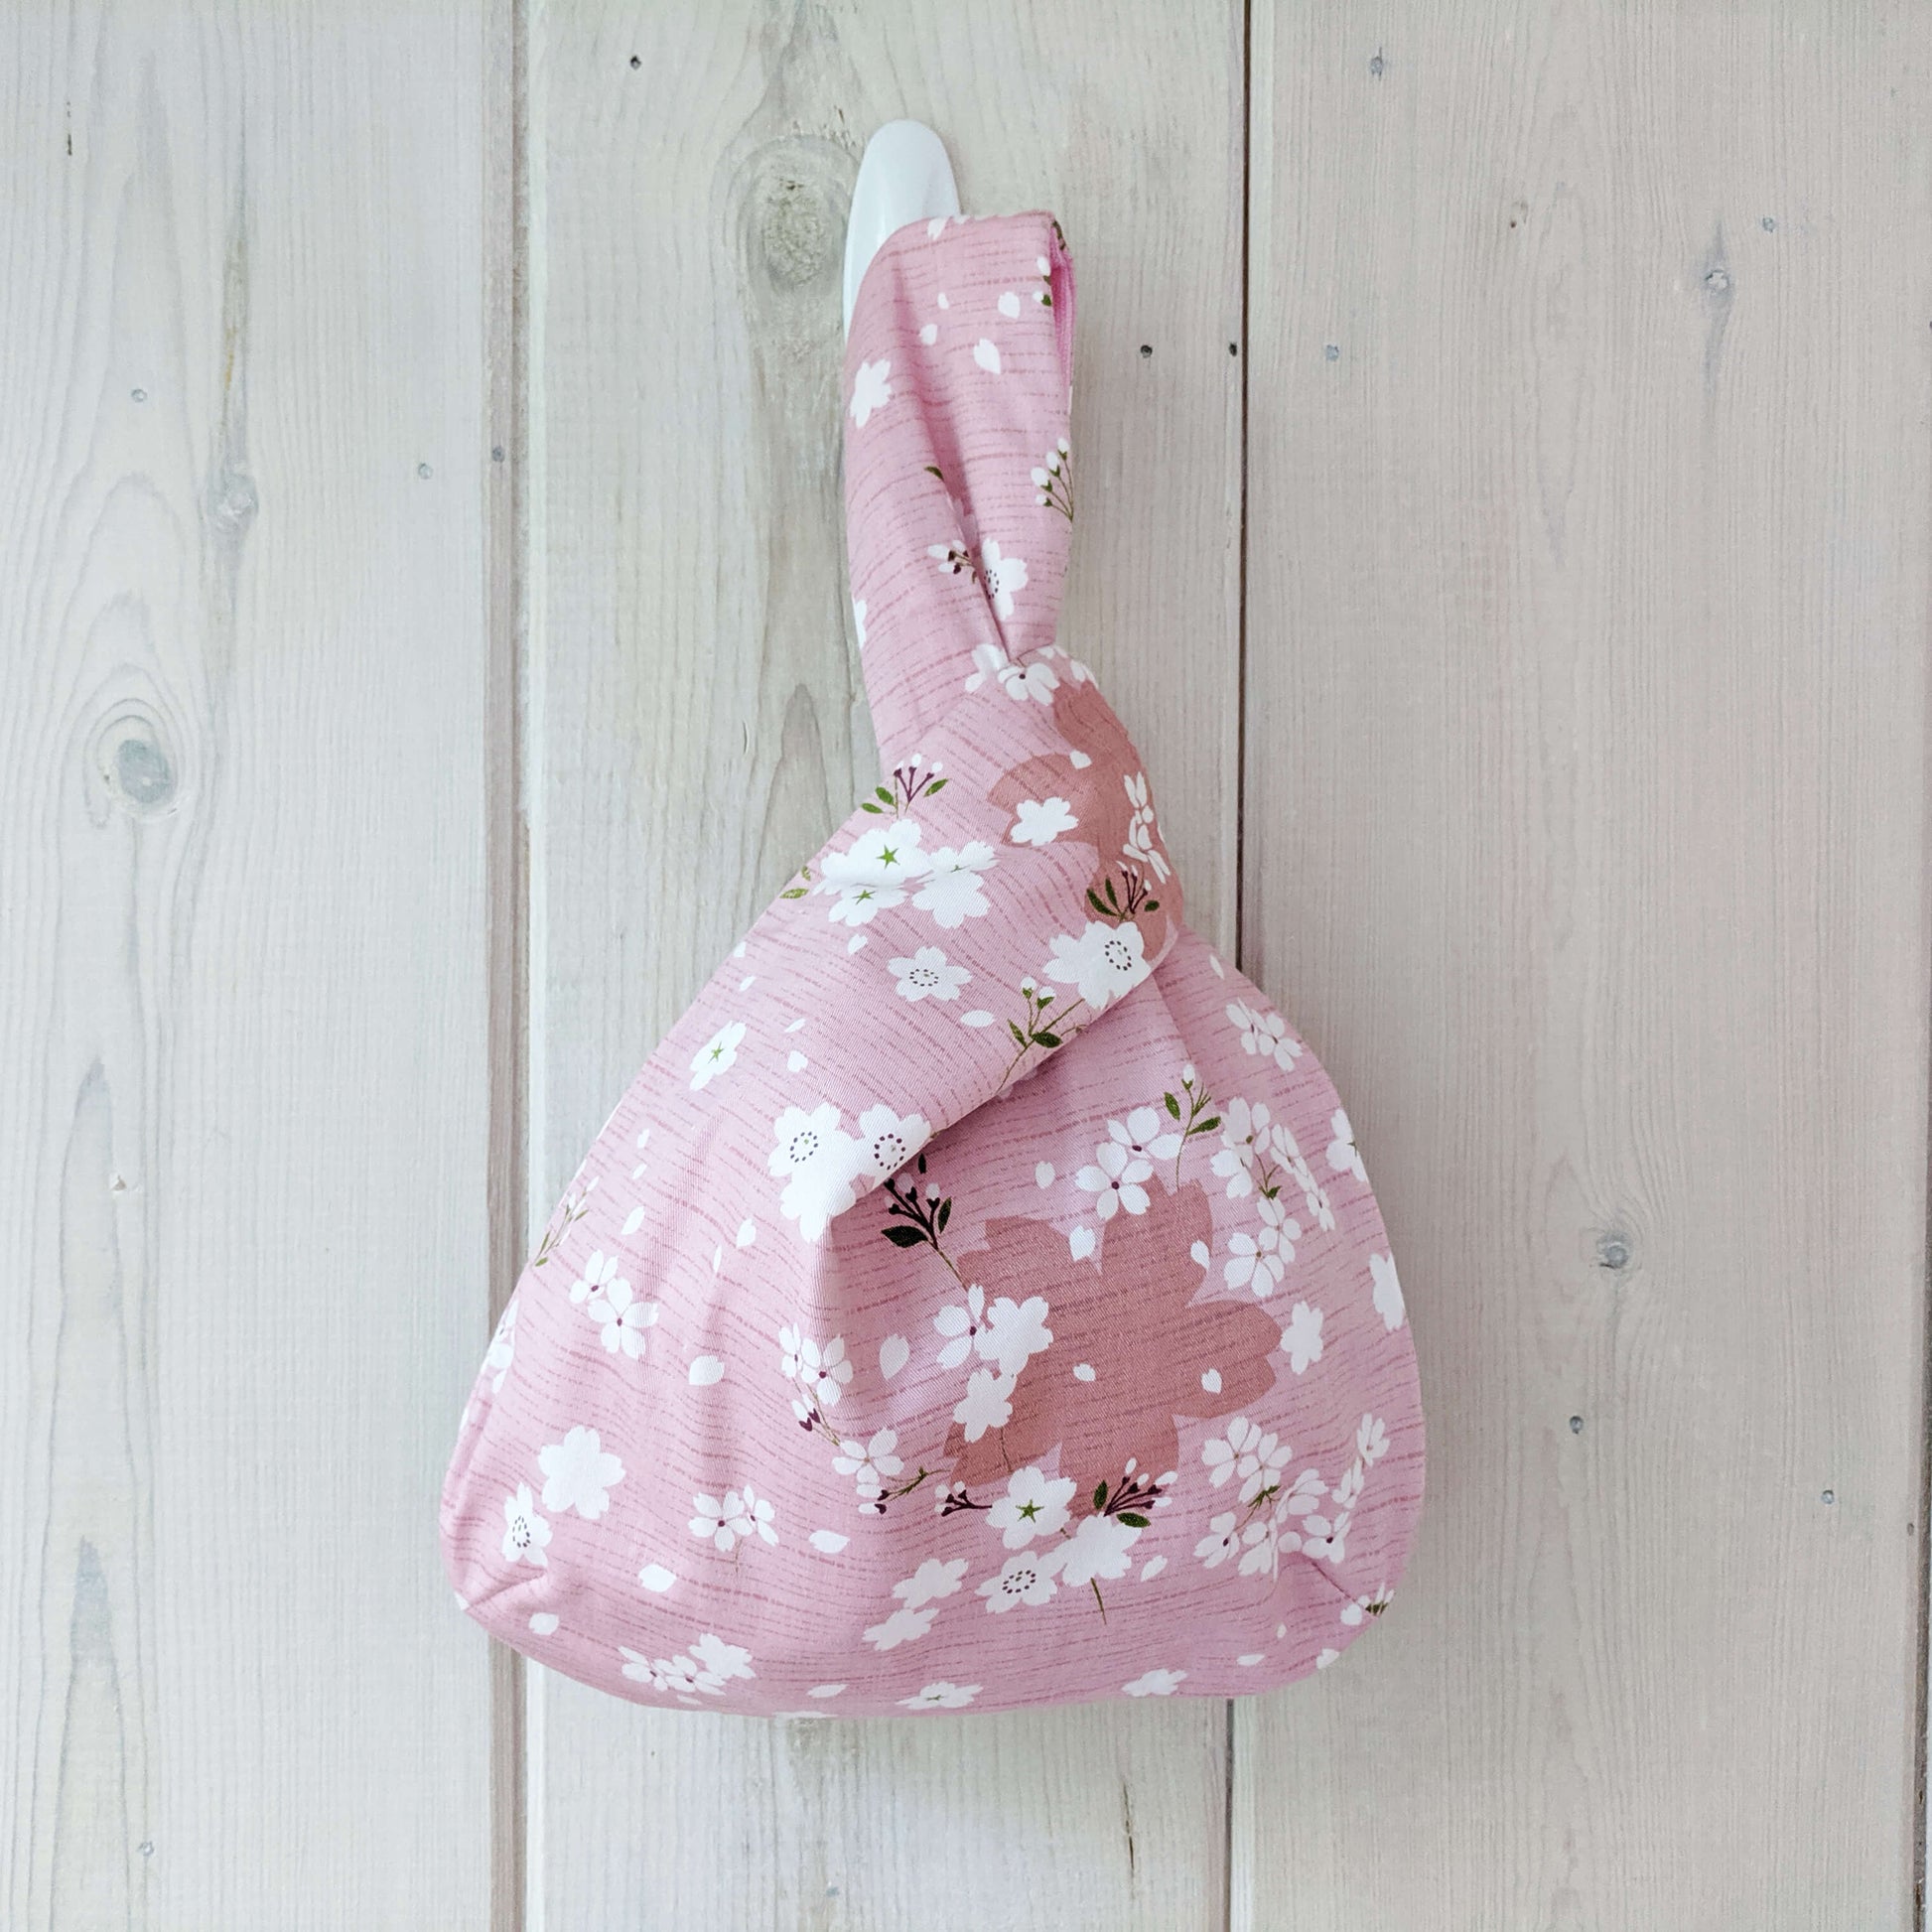 Knot Bag Wristlet - Sweet Cherry Blossoms Pink